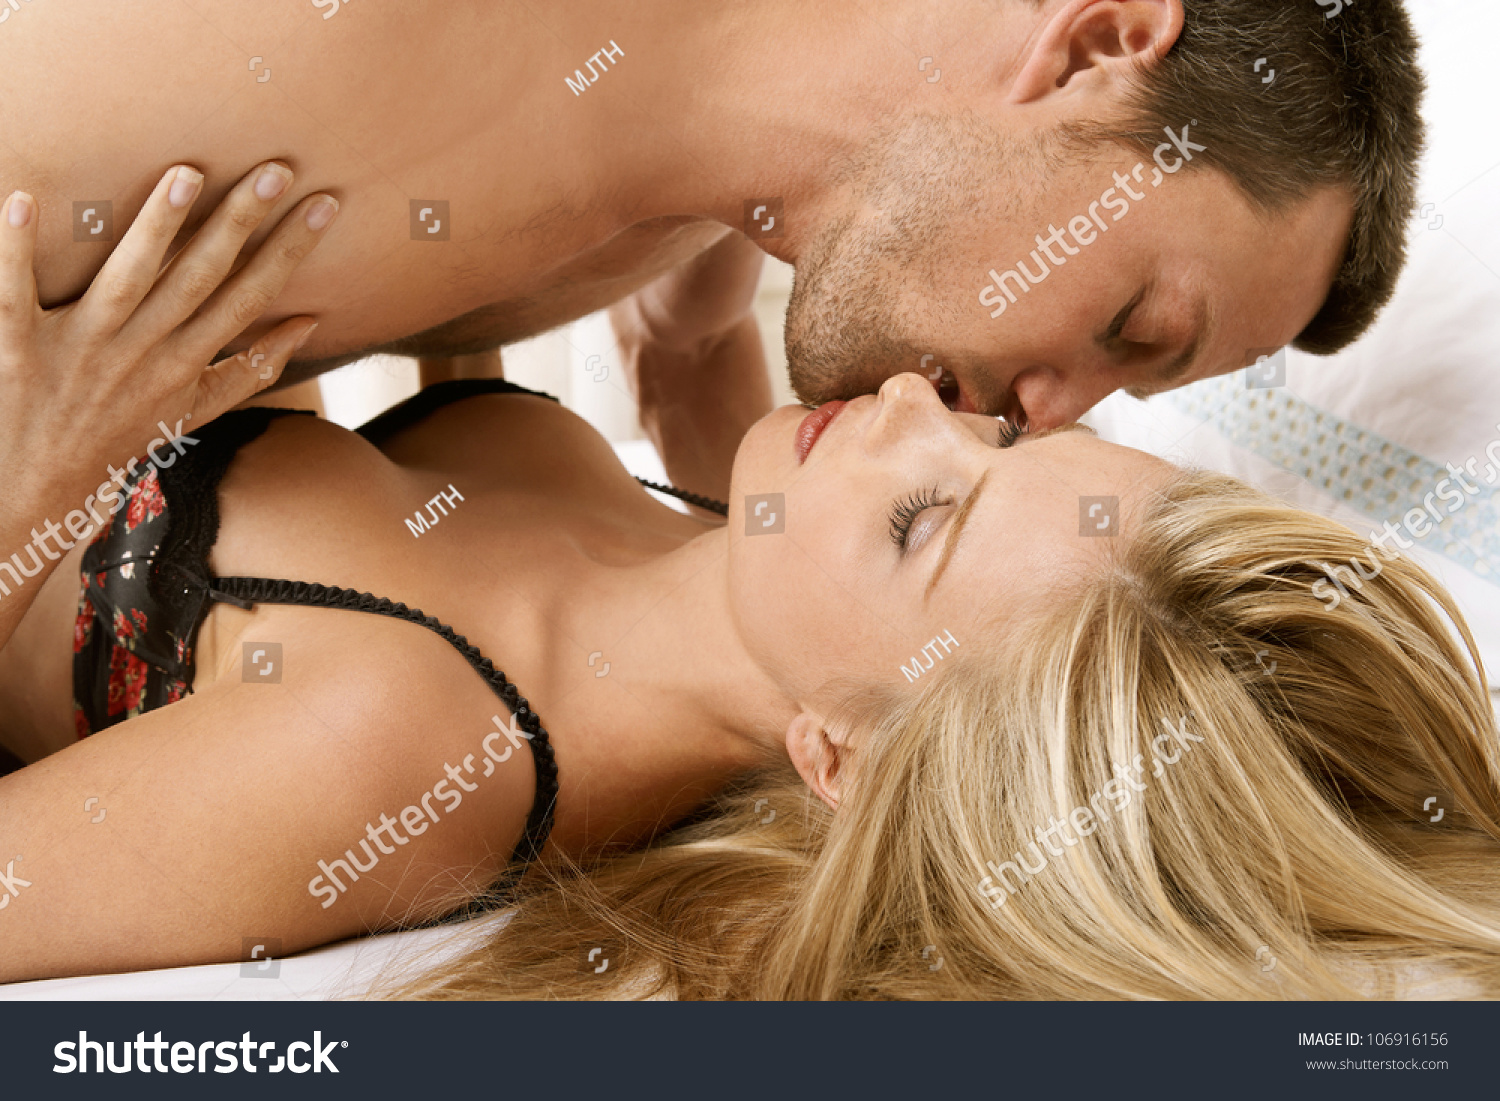 A Couple Doing Sex 77